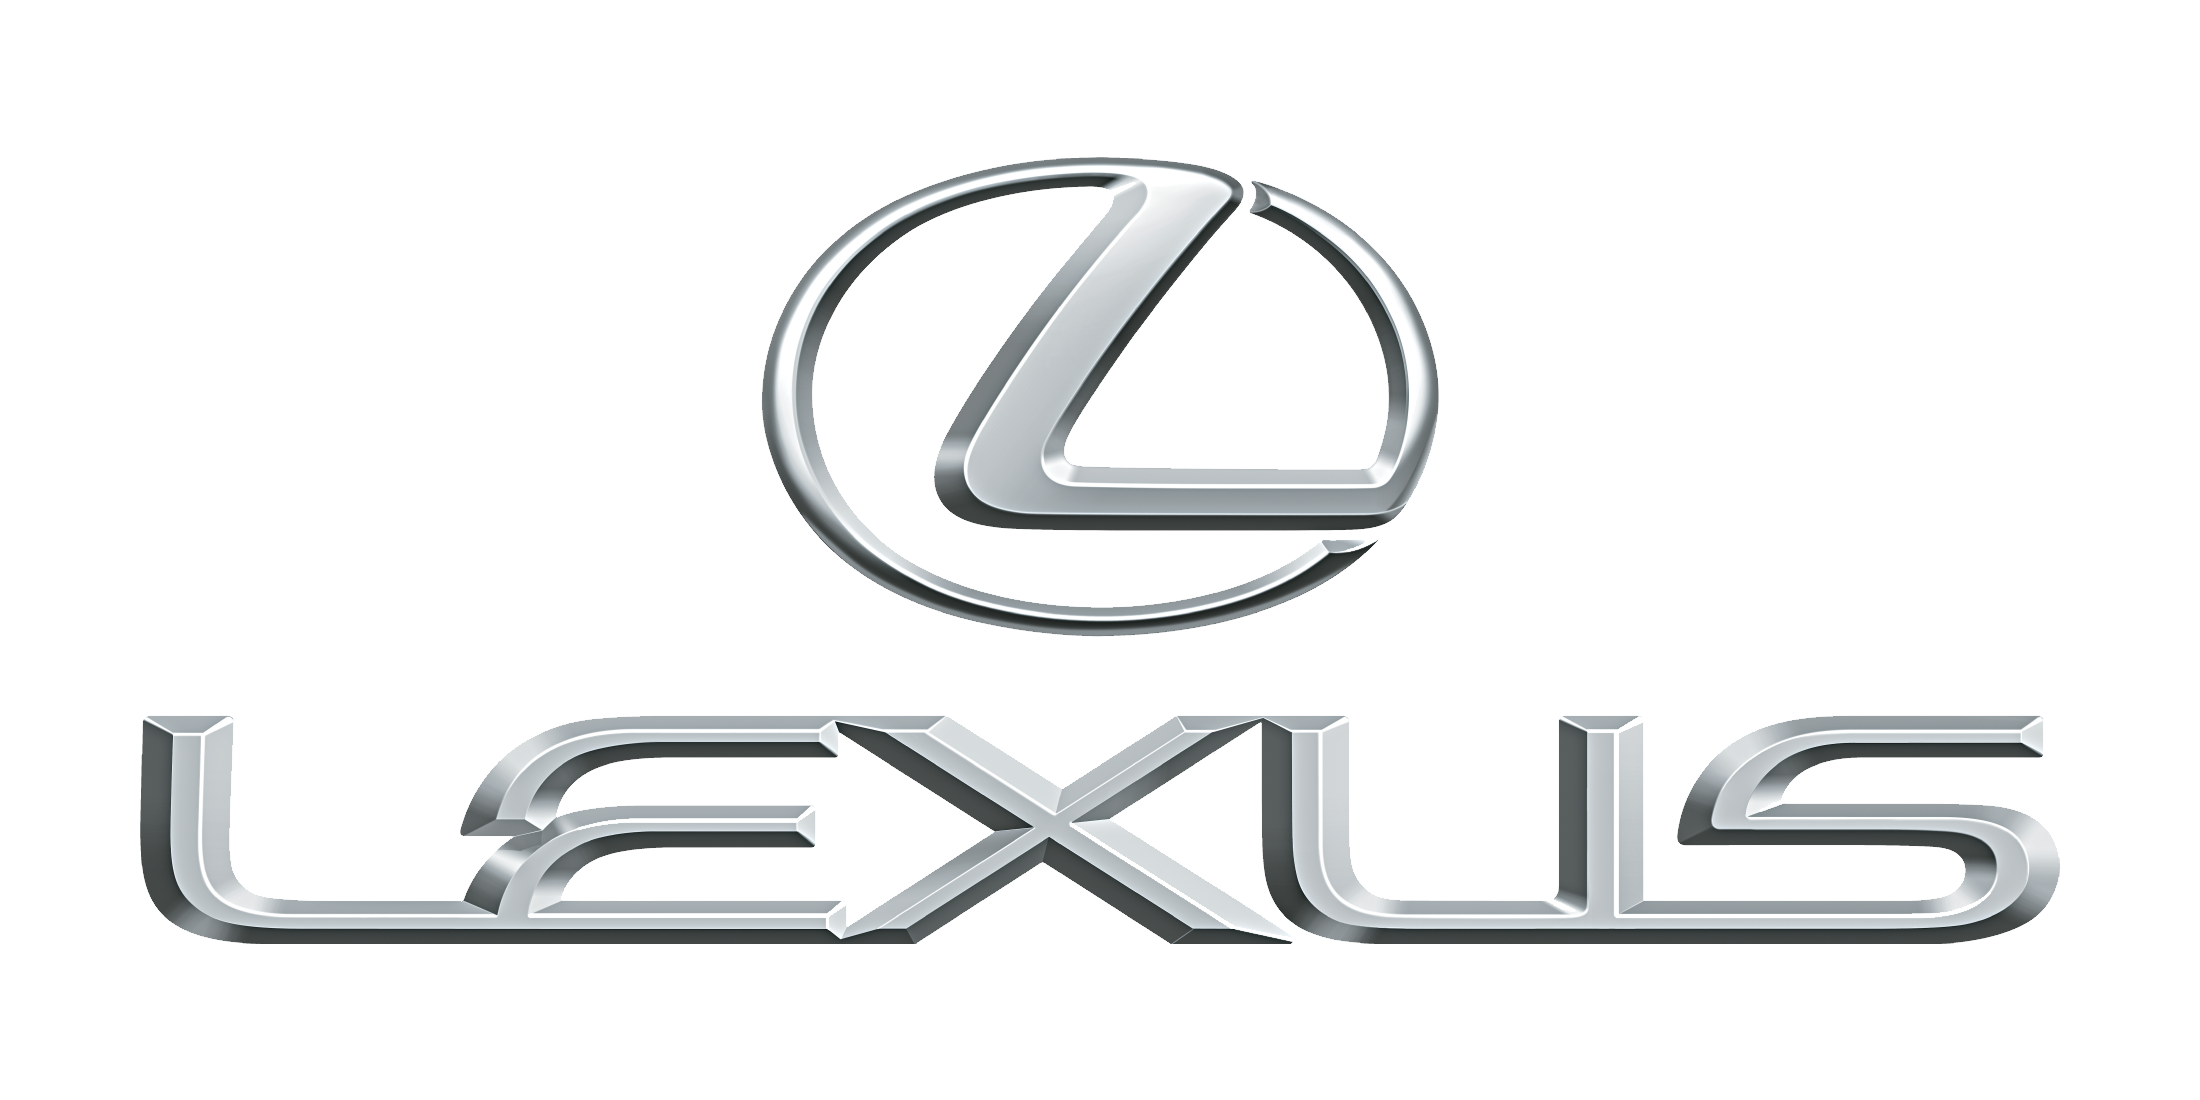 lexus logo design png downloa